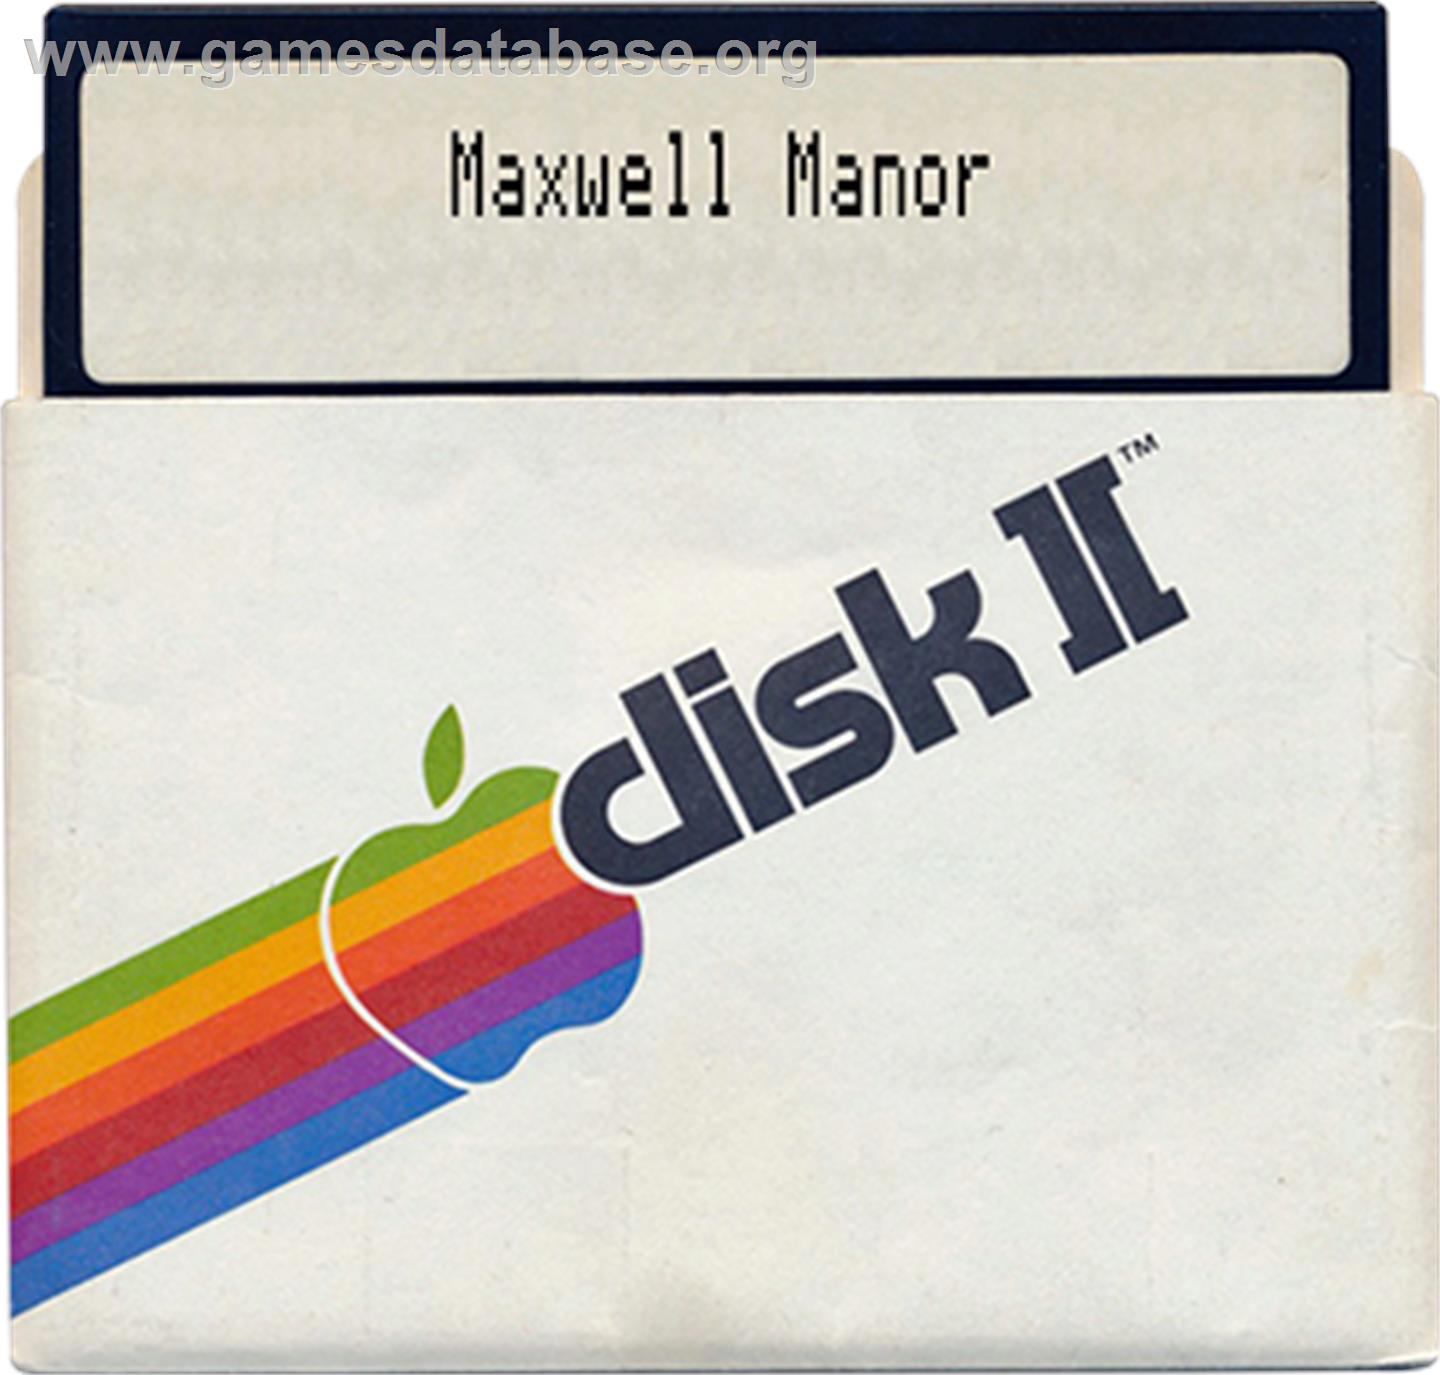 Maxwell Manor - Apple II - Artwork - Disc